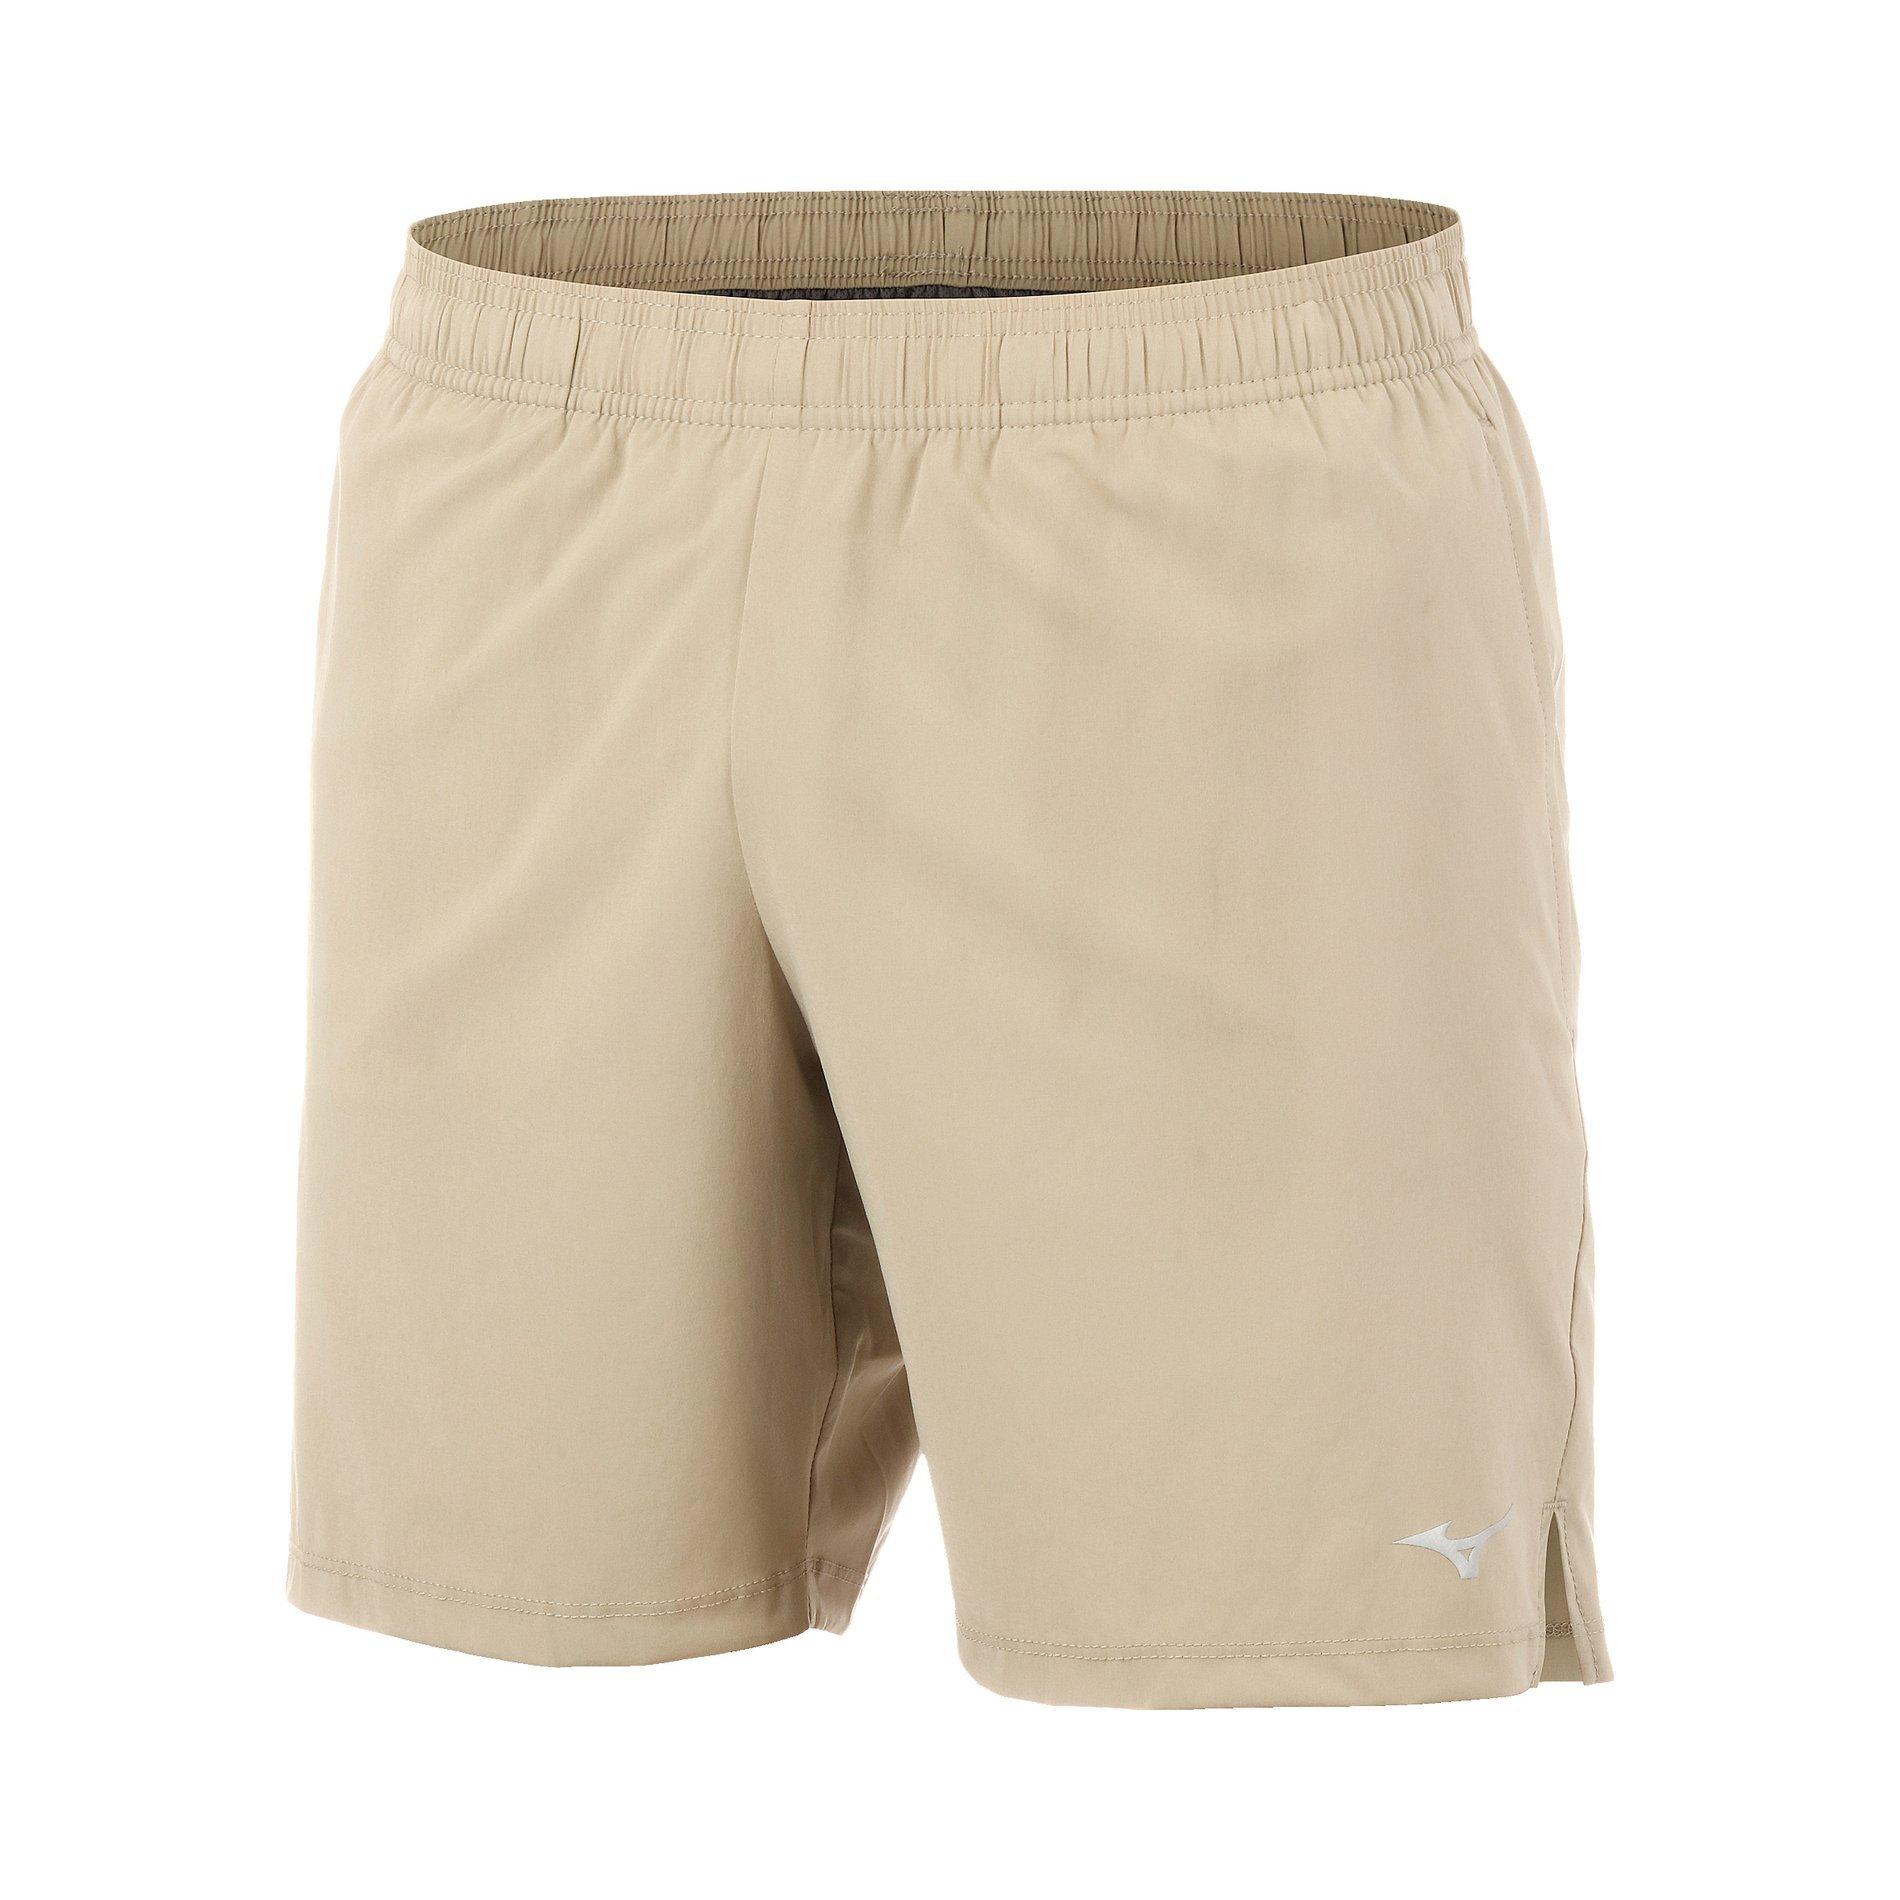 Mizuno Amplify Men's Shorts 8 in, Mens, Shorts, K2GB0515, White, M